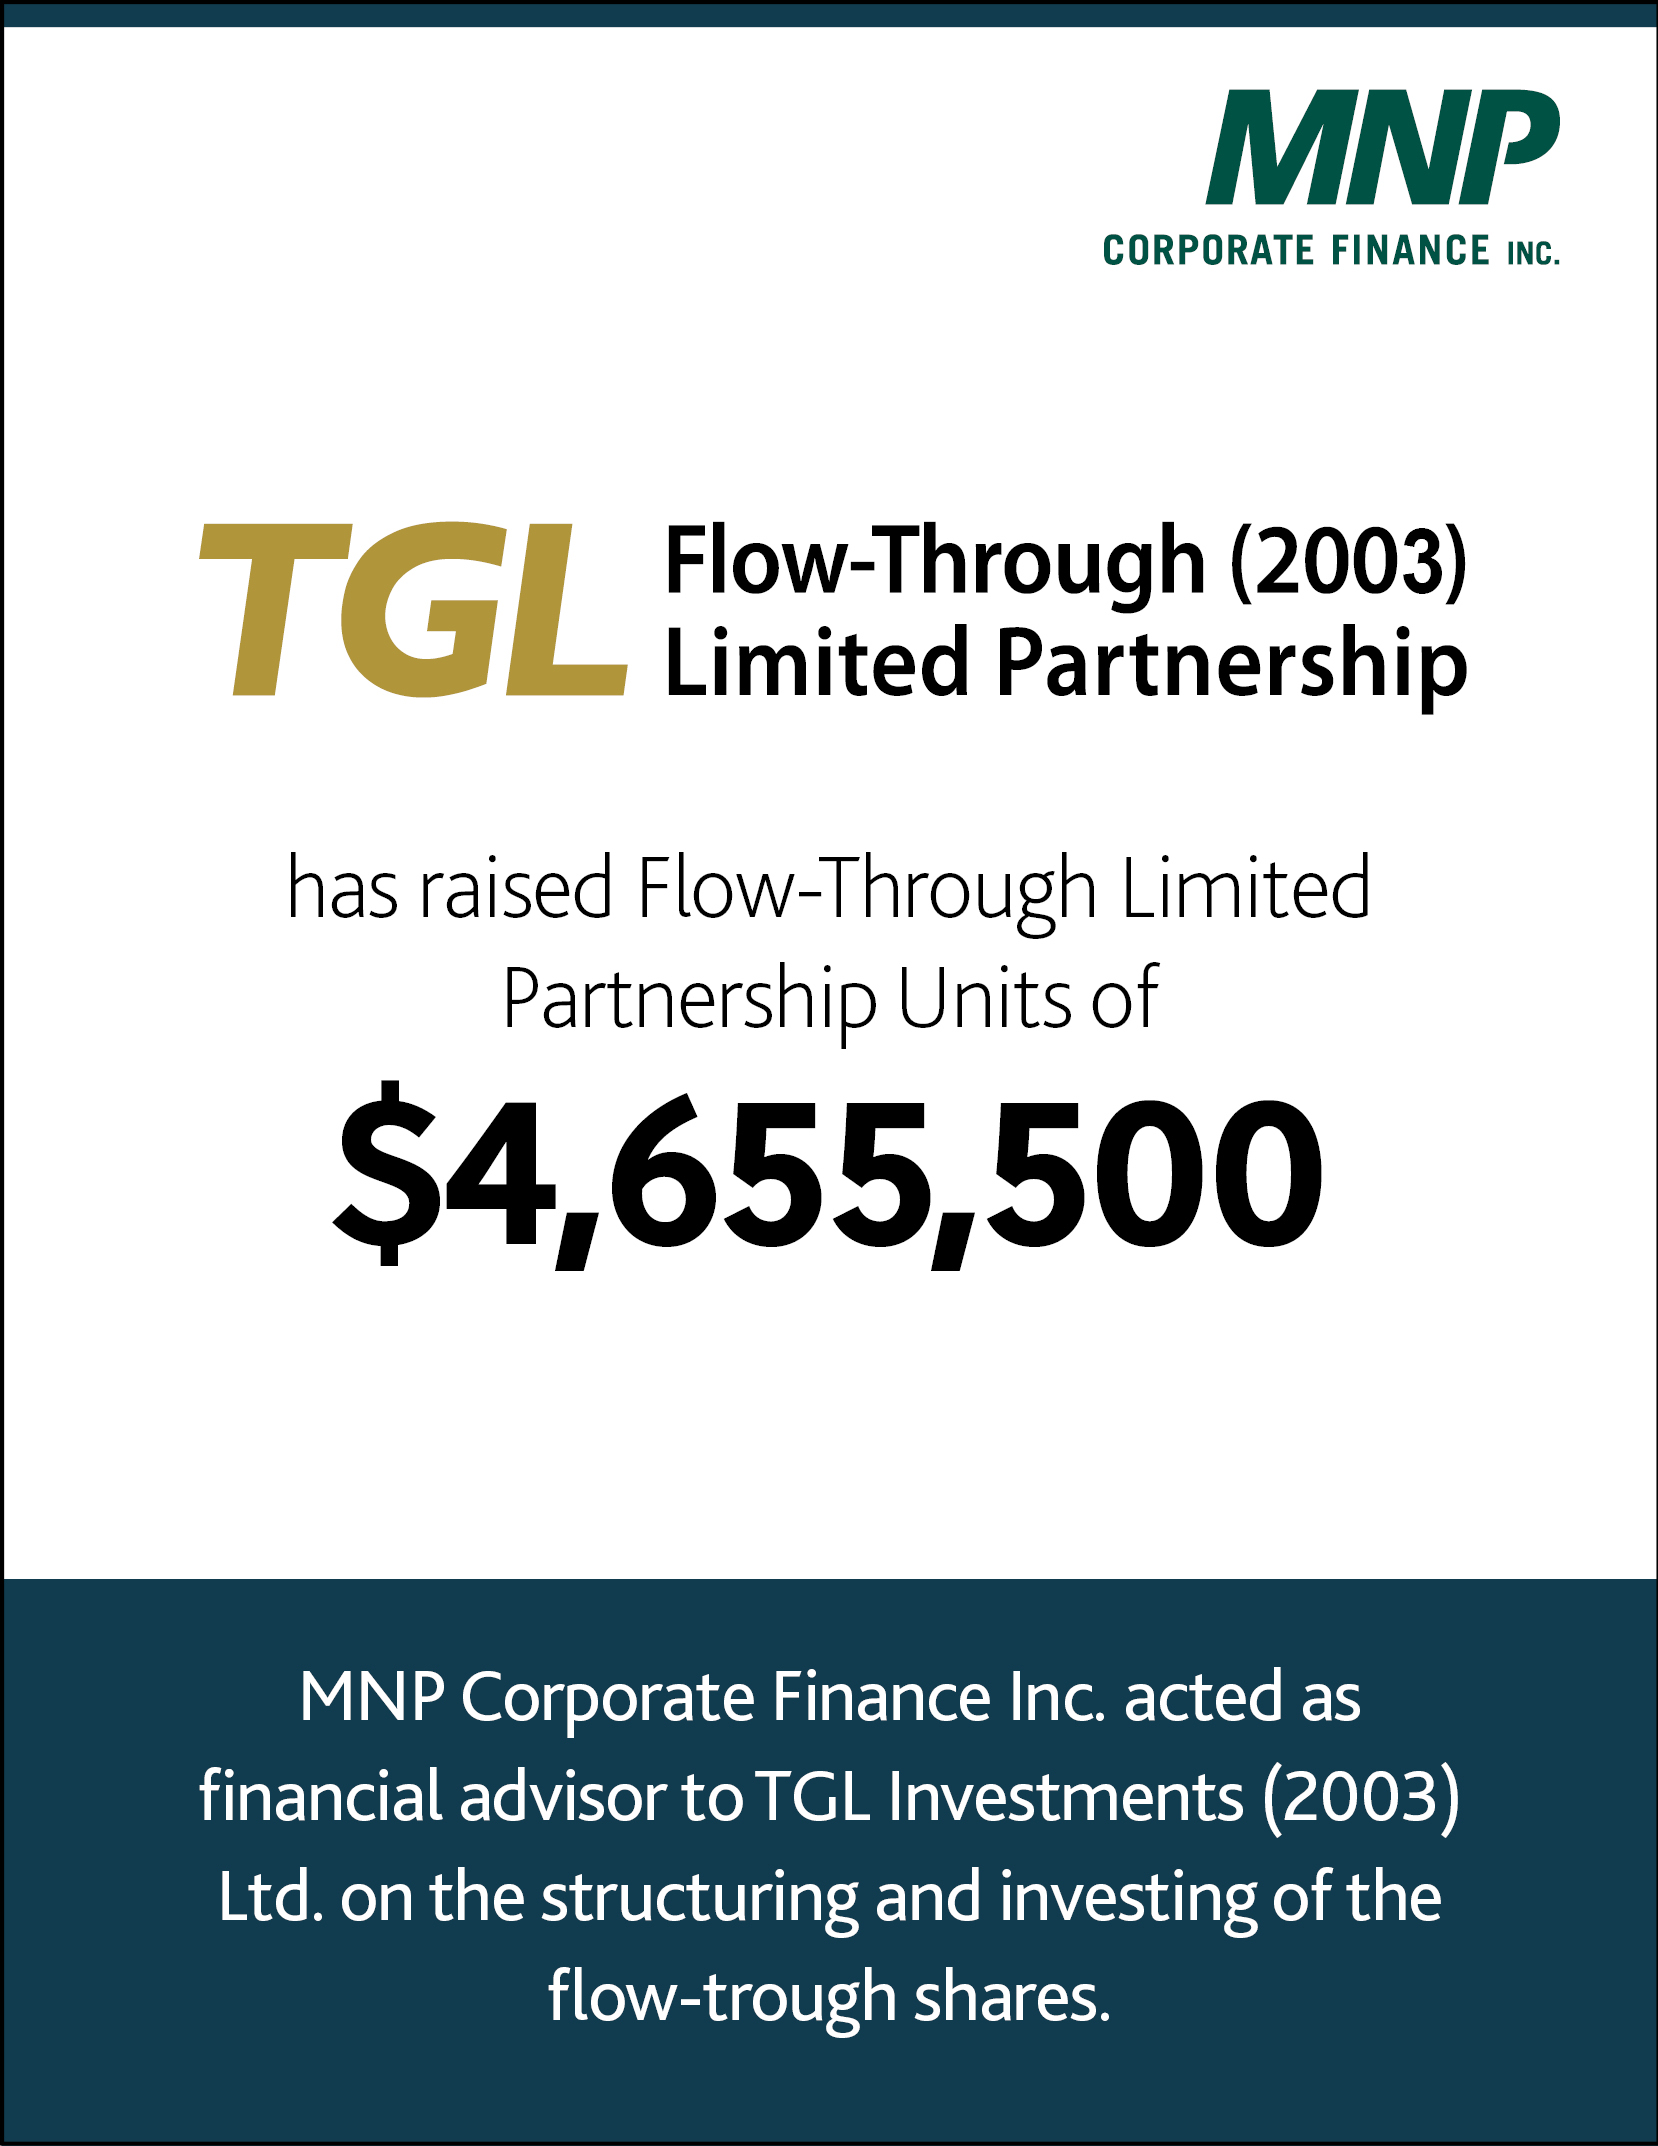 TGL Flow-Through (2003) Limited Partnership has raised Flow-Through Limited Partnership Units of $4,655,500